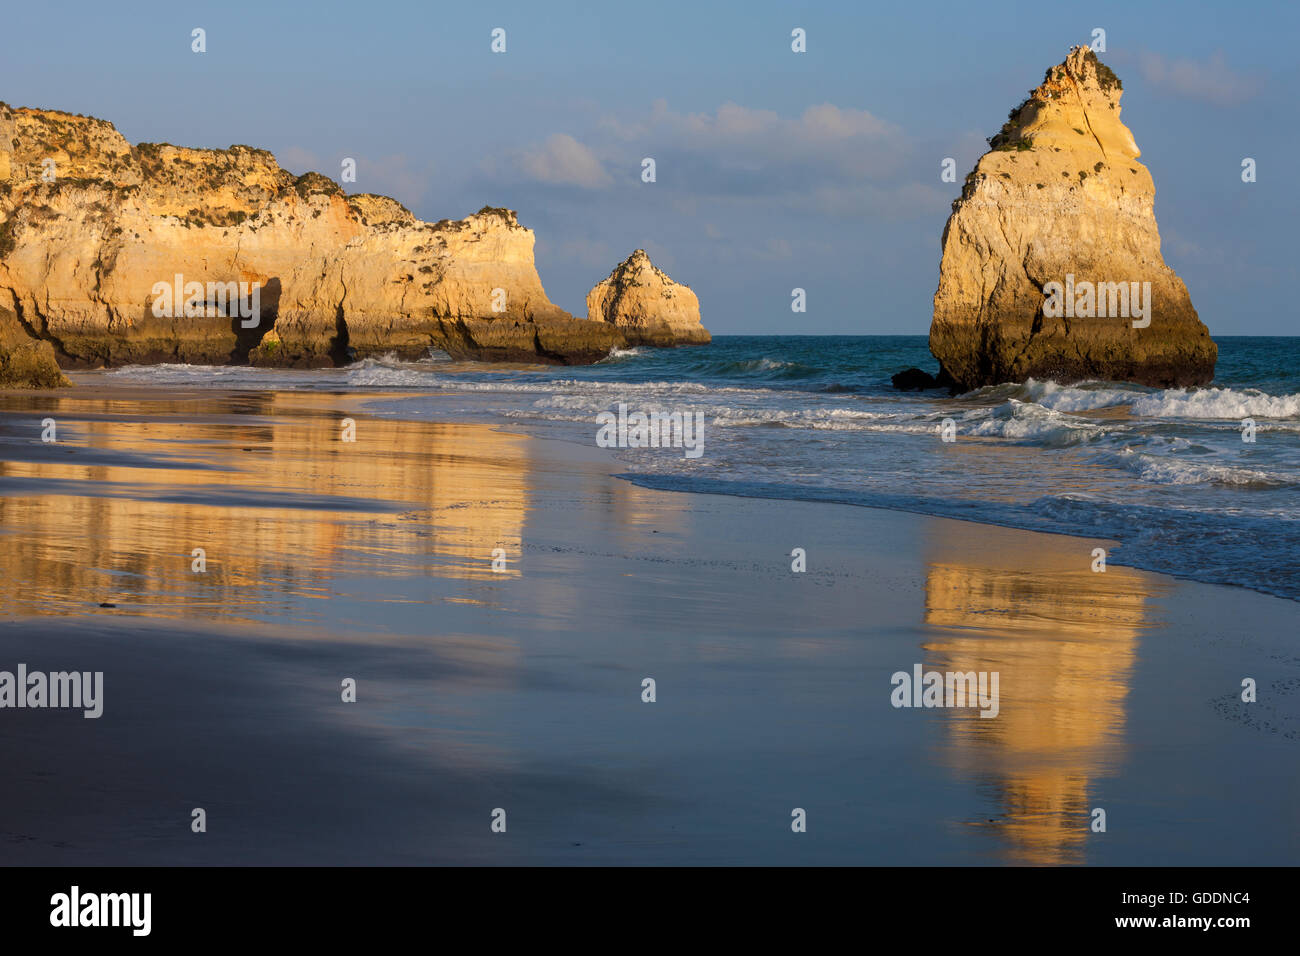 Praia dos Tres Irmaos, Portugal, Algarve Foto de stock